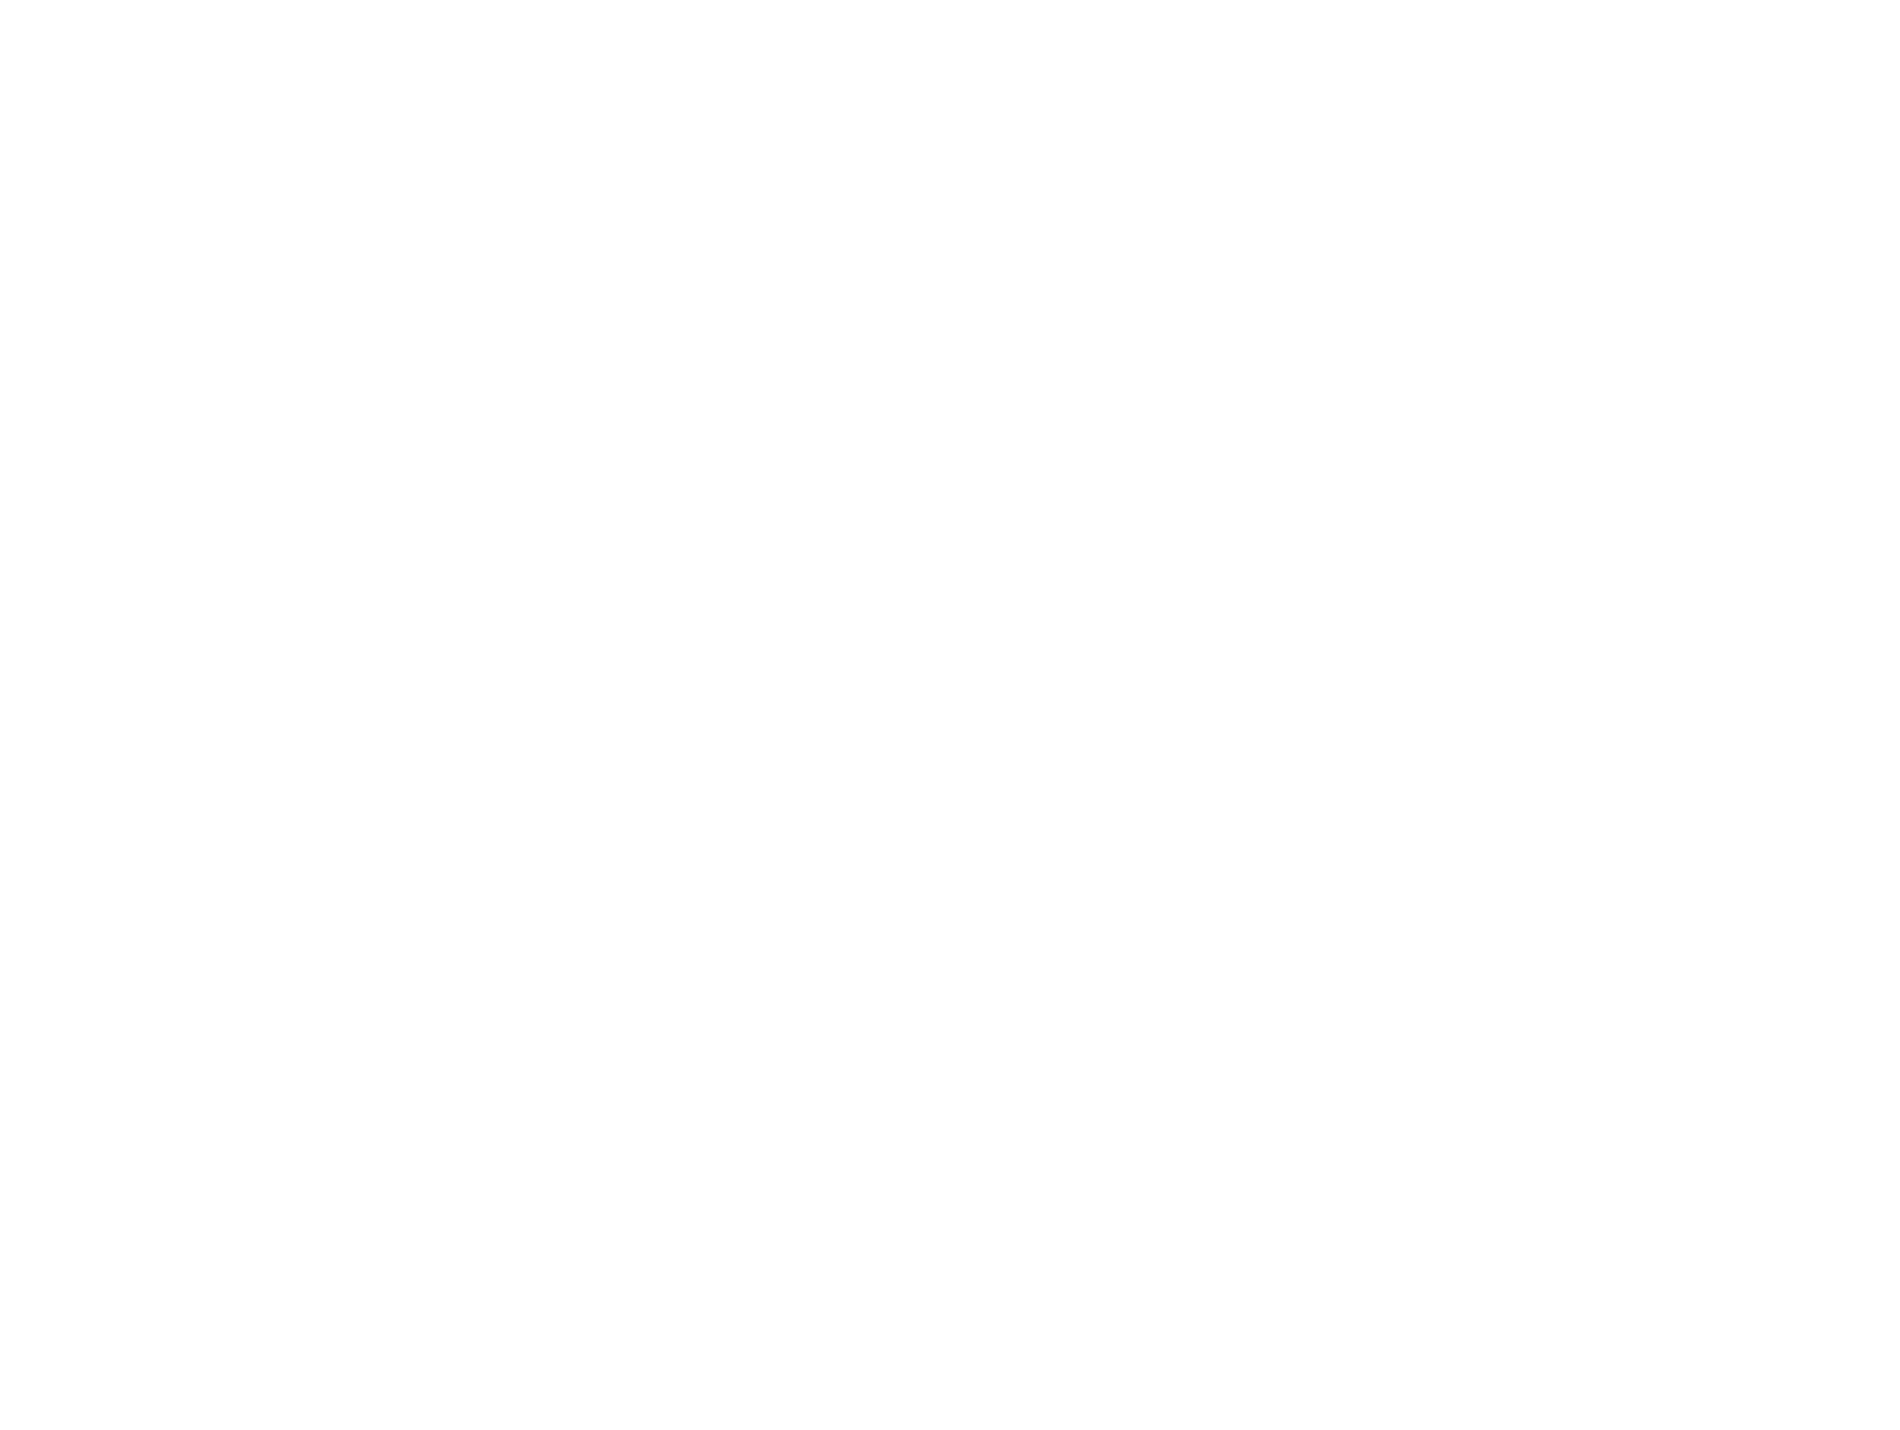 Logo Design for Orran company